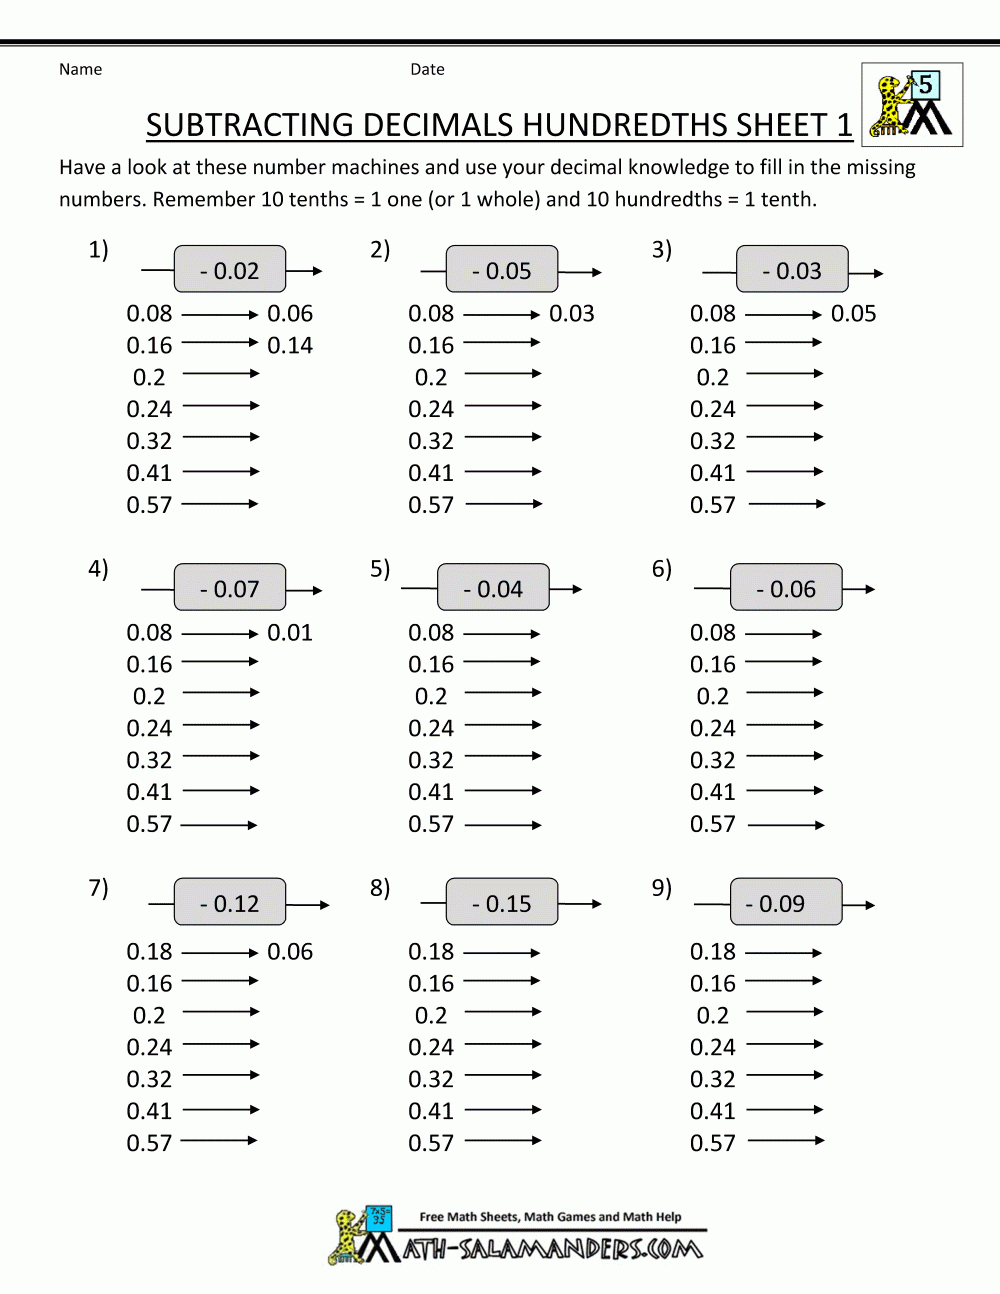 printable-multiplication-sprints-printablemultiplication